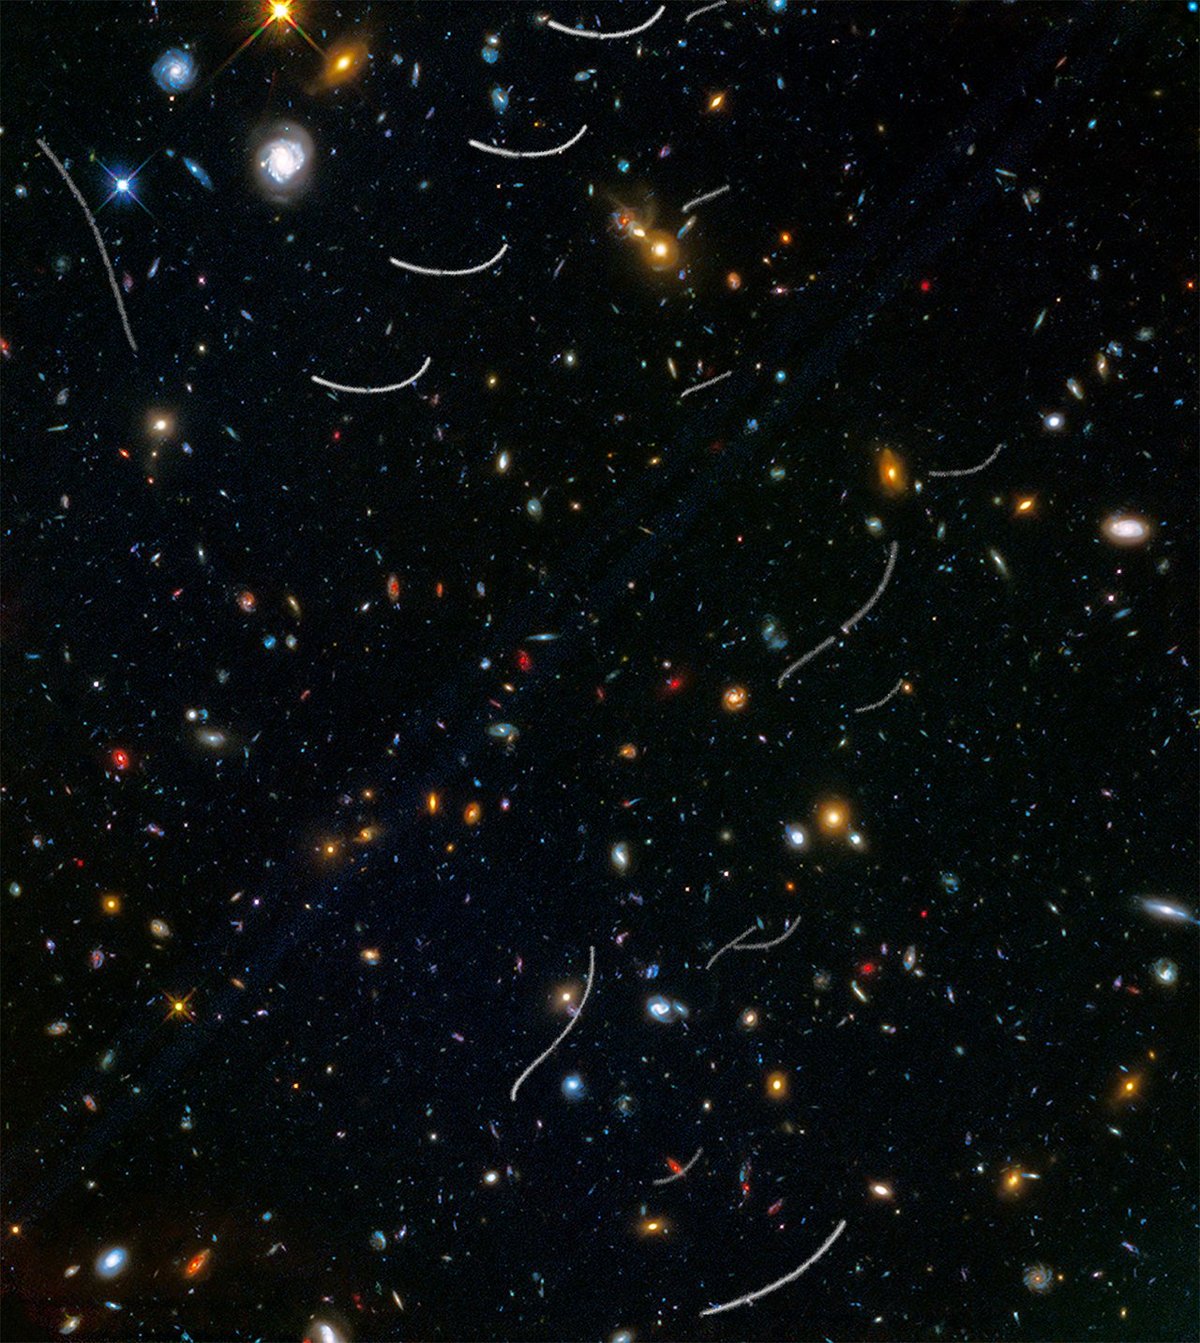 Hubble Abel 370 avec astéroïdes © NASA, ESA, and B. Sunnquist and J. Mack (STScI)